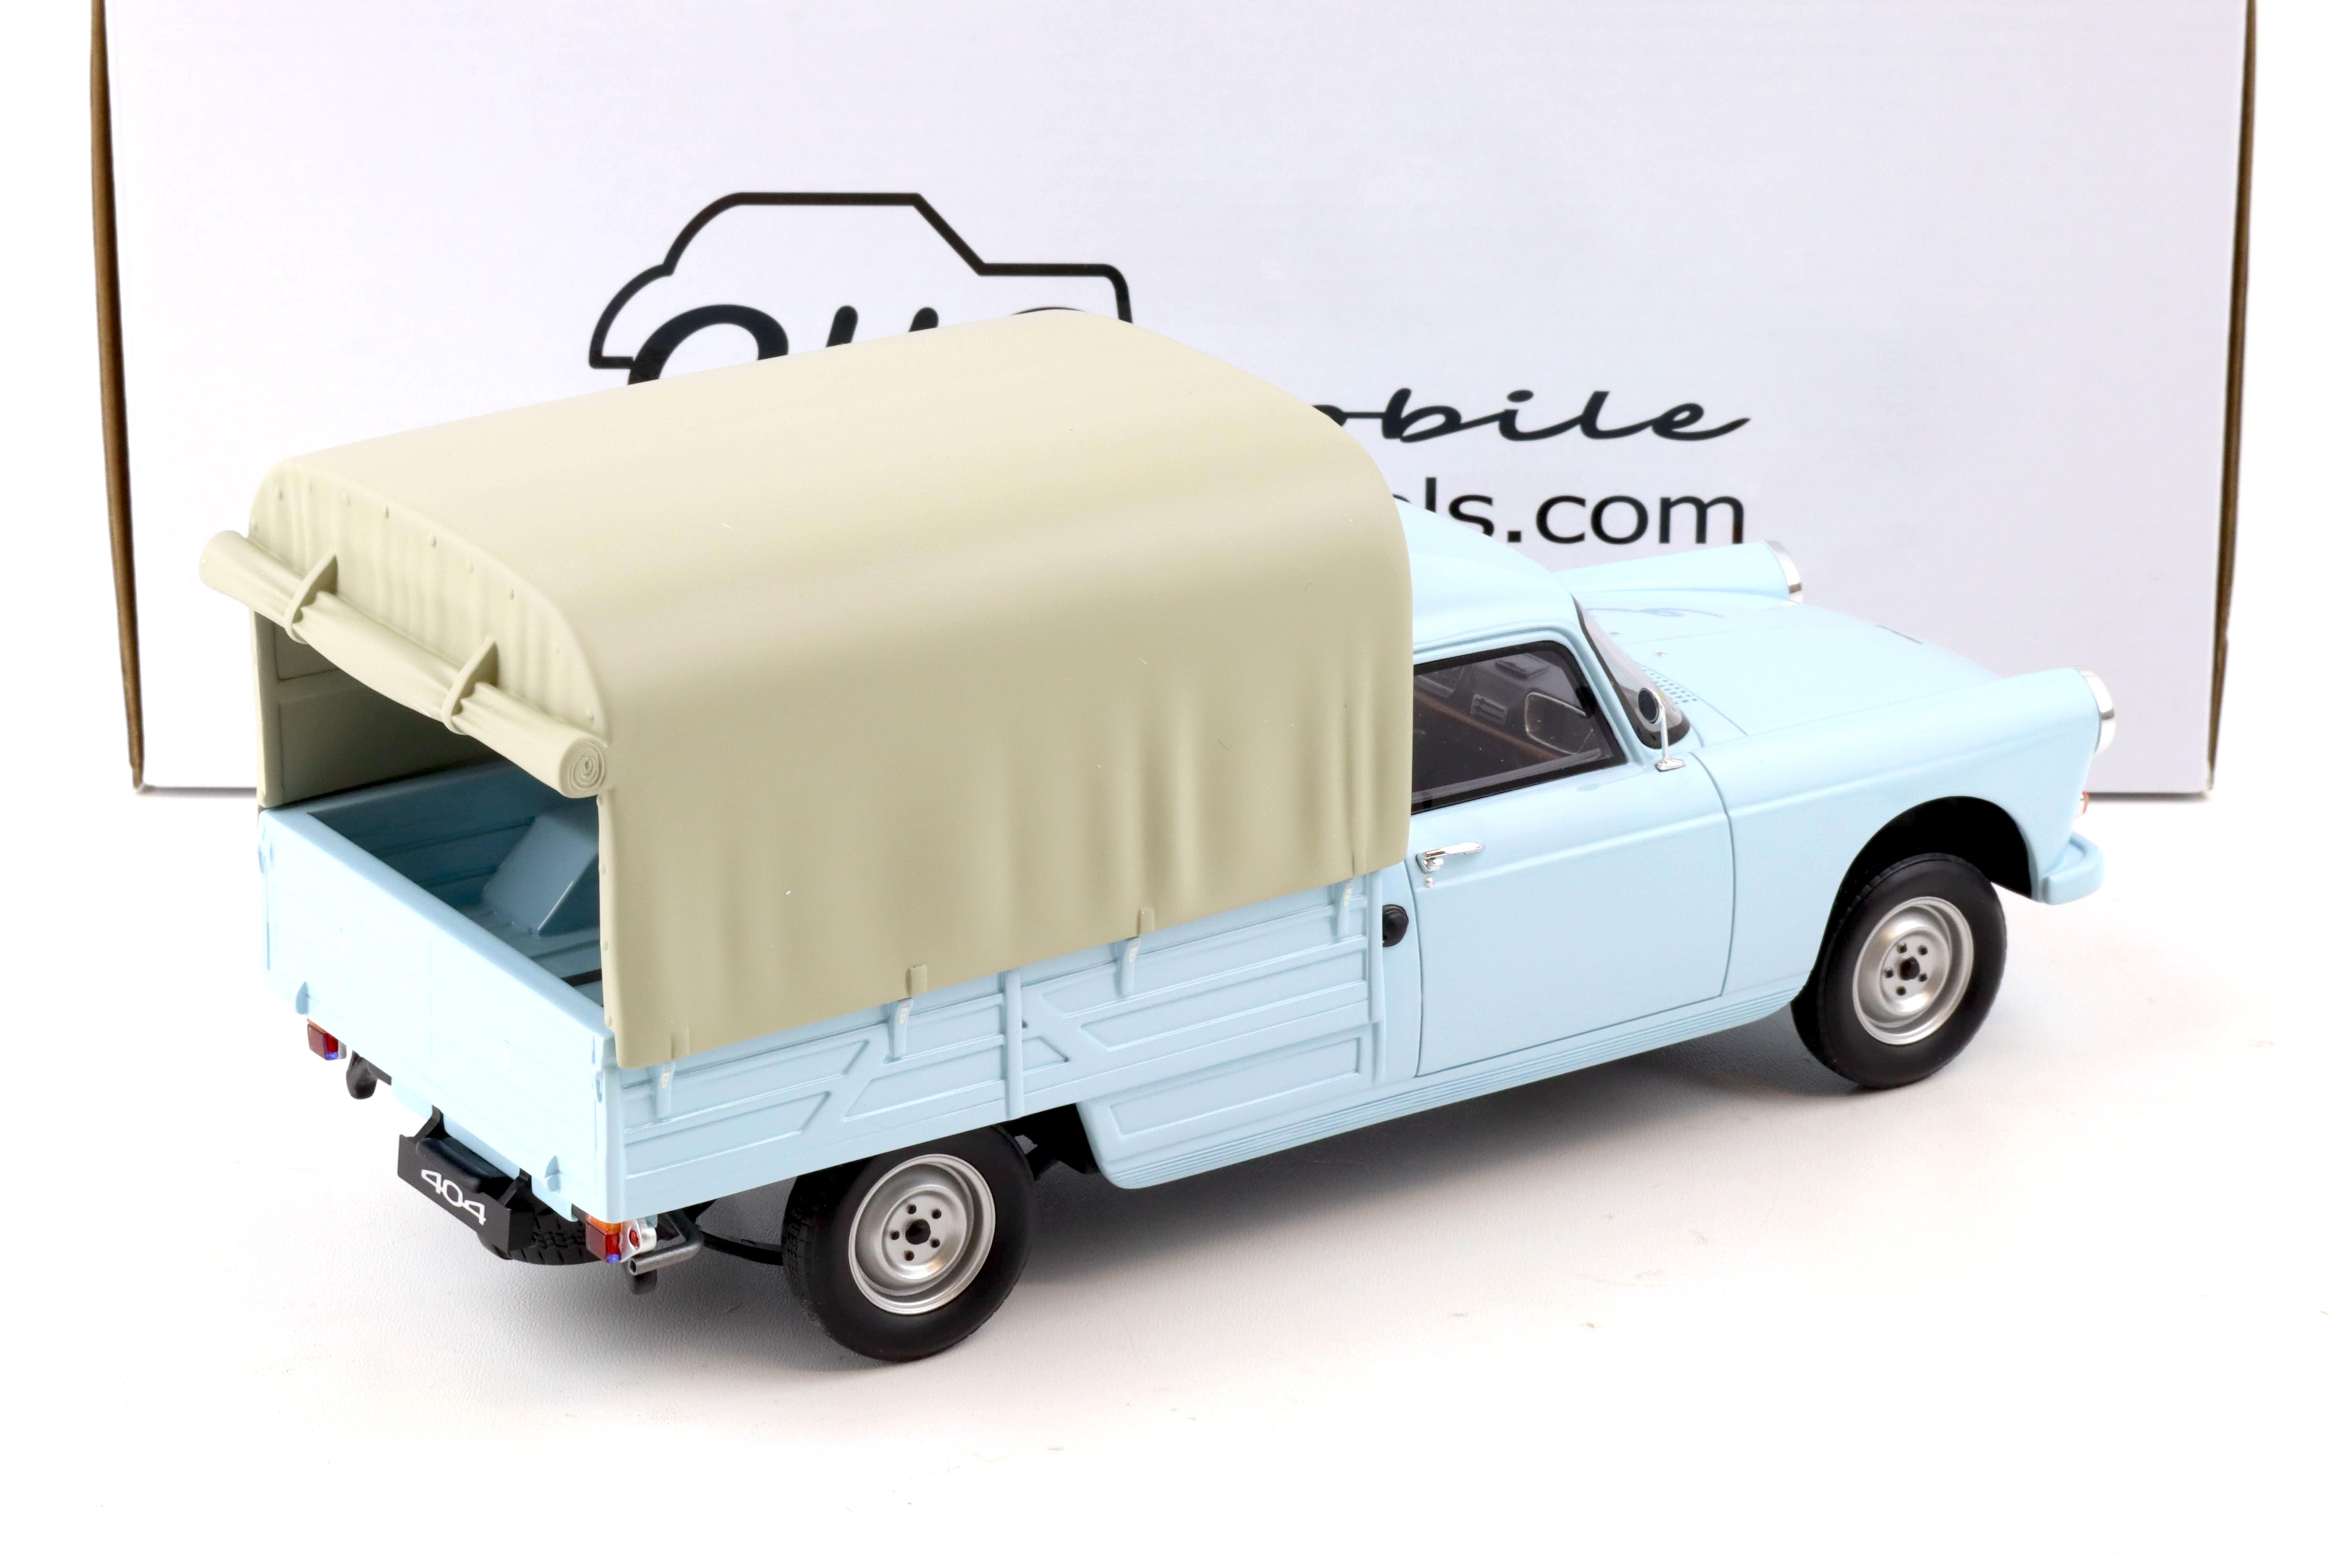 1:18 OTTO mobile OT1036 Peugeot 404 Pick-Up Bache blue 1967